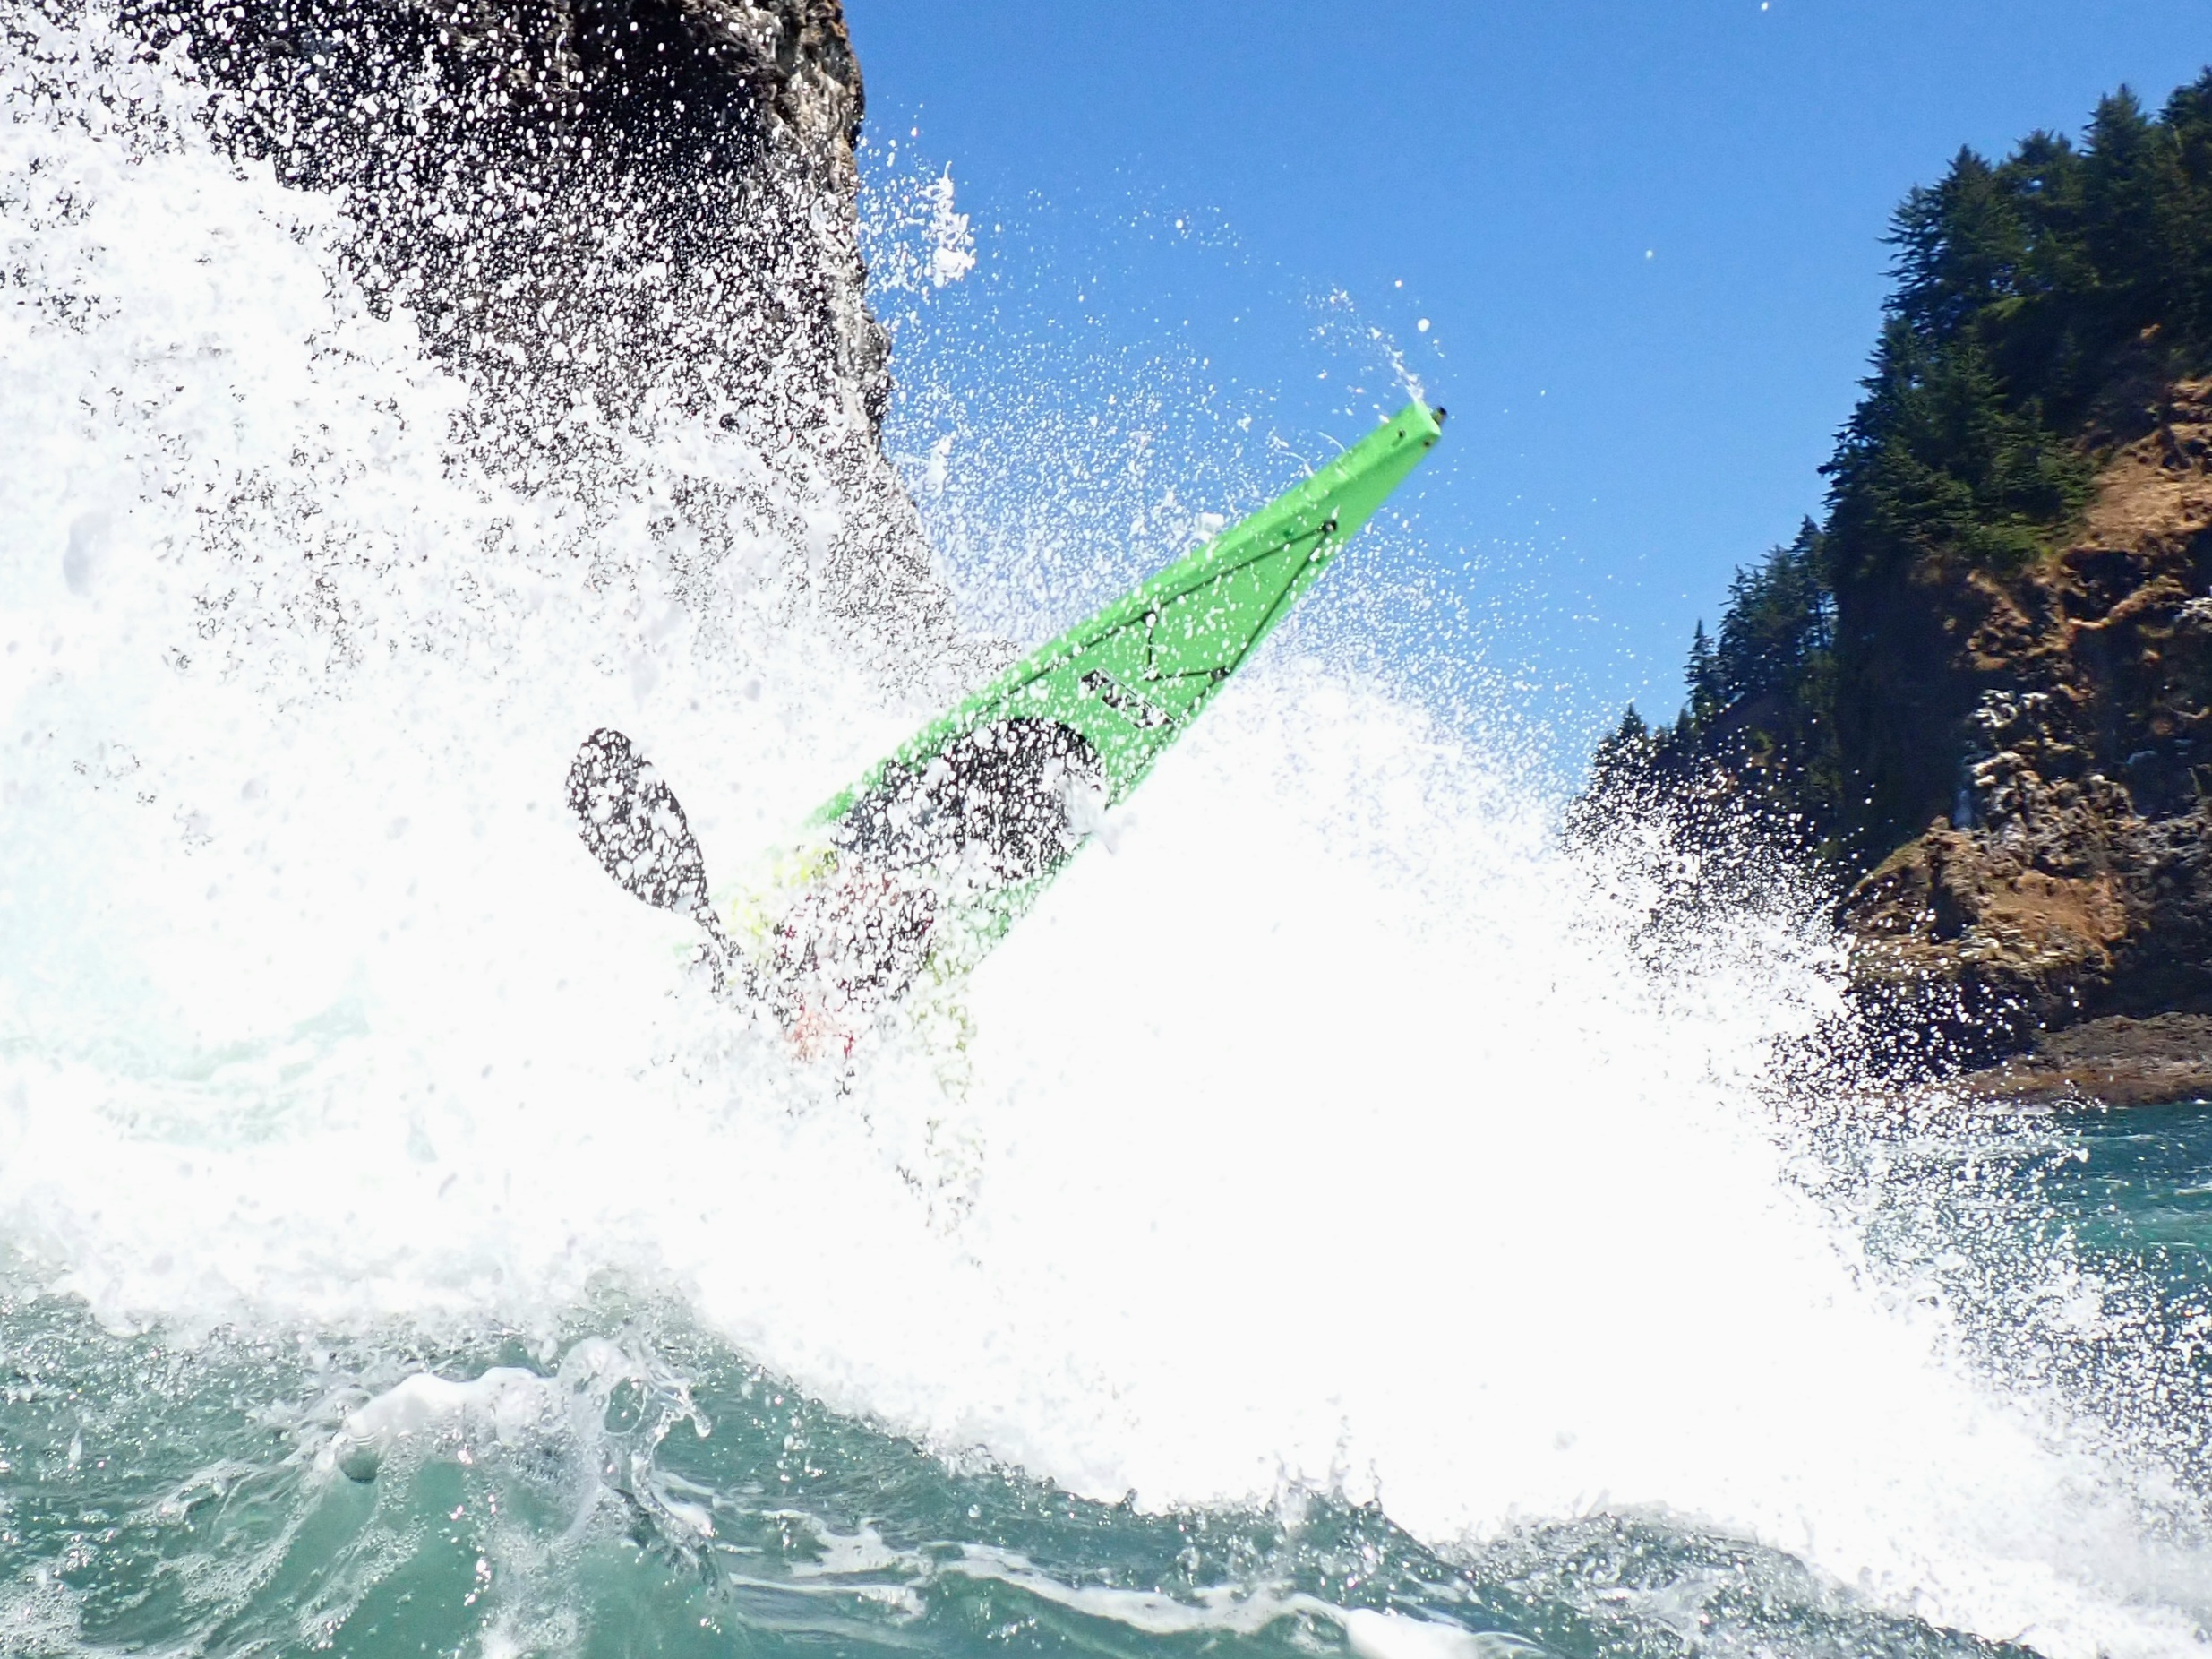 Kyle Banerjee kayaking off Cascade Head